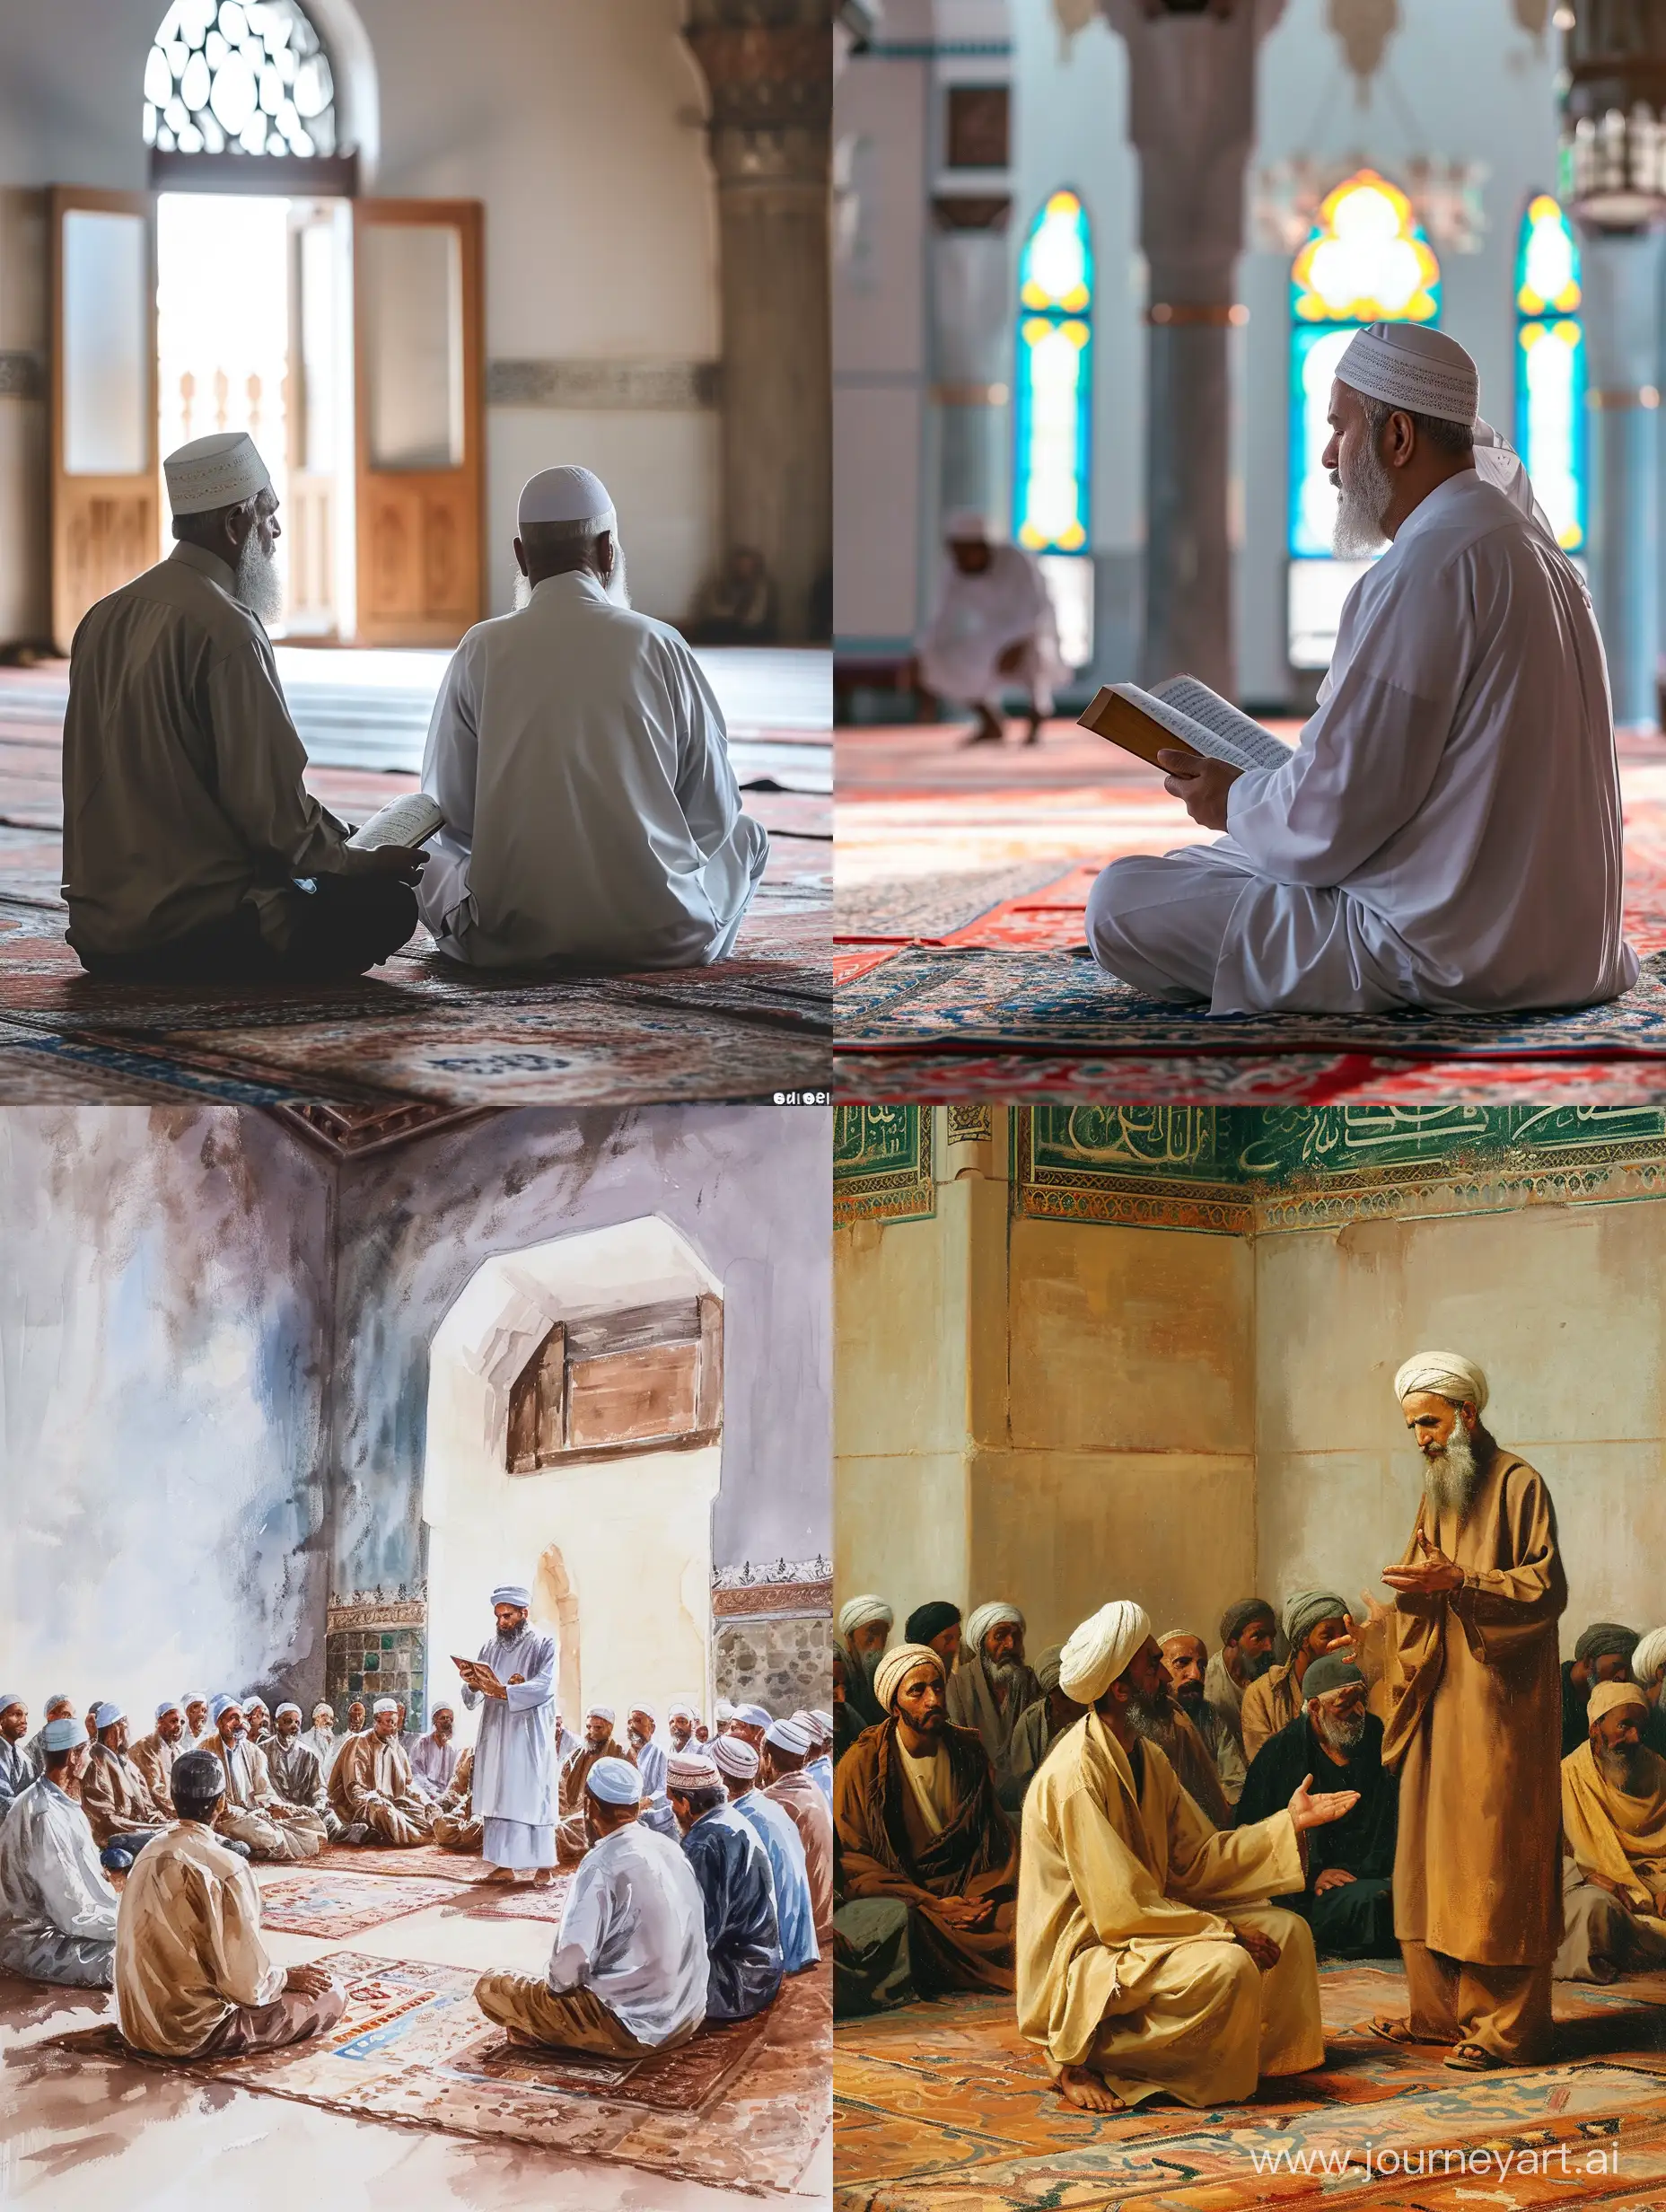 A Muslim teaches Muslims in a mosque